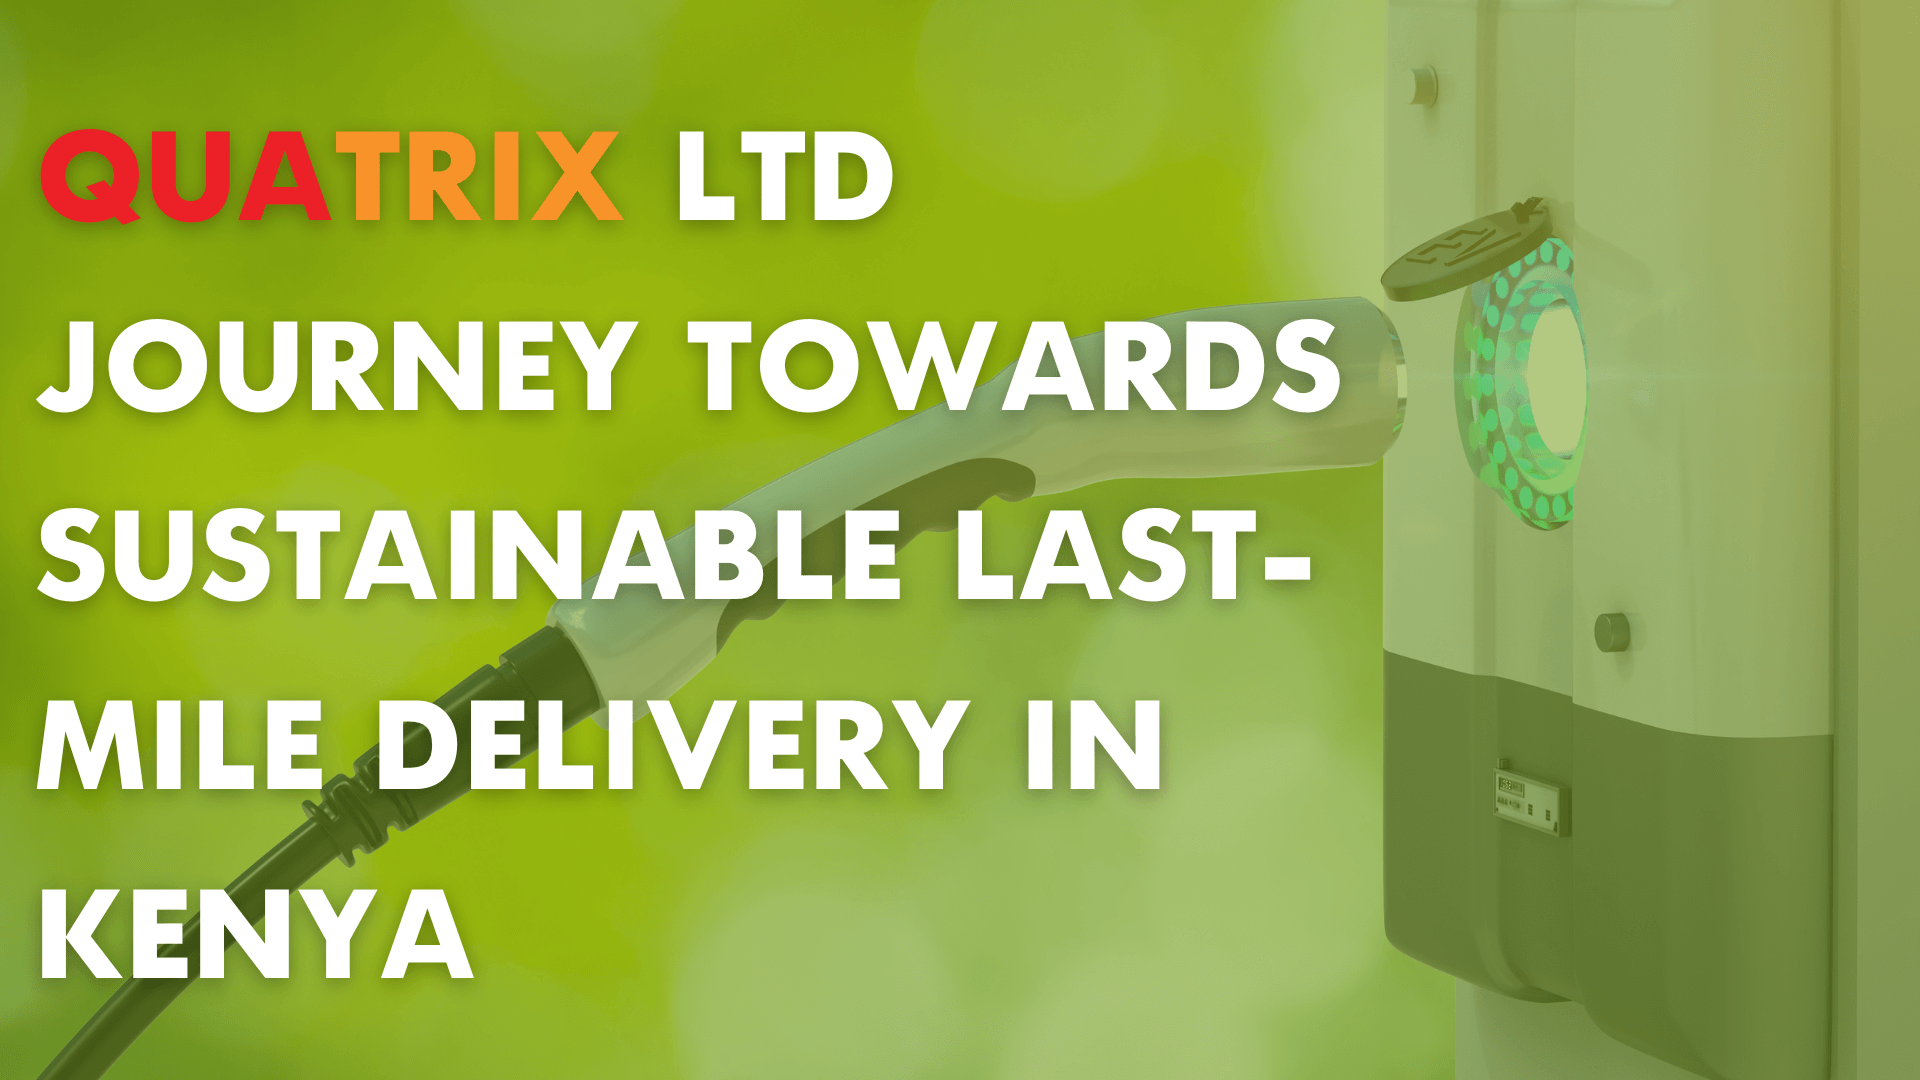 Quatrix Ltd Journey Towards Sustainable Last-Mile Delivery in Kenya